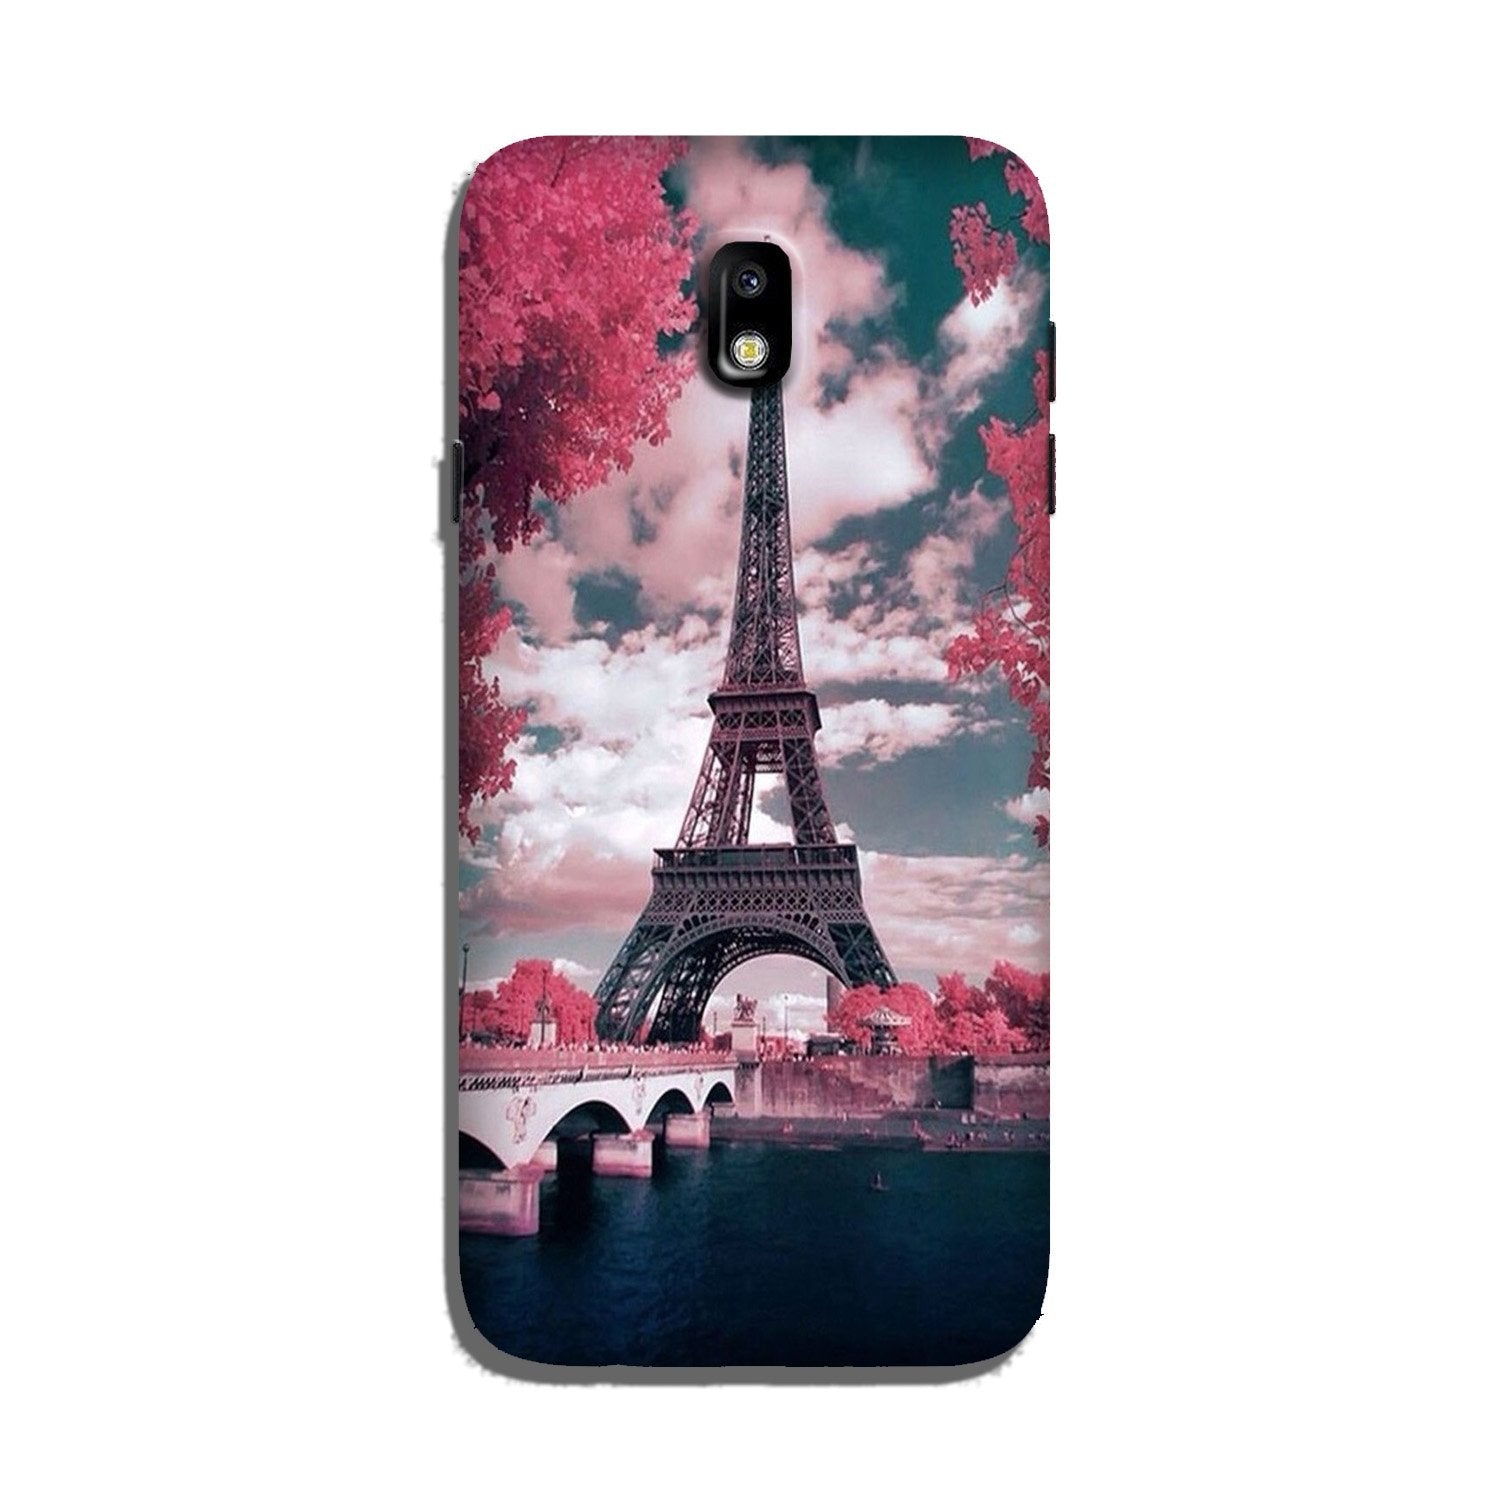 Eiffel Tower Case for Galaxy J3 Pro(Design - 101)